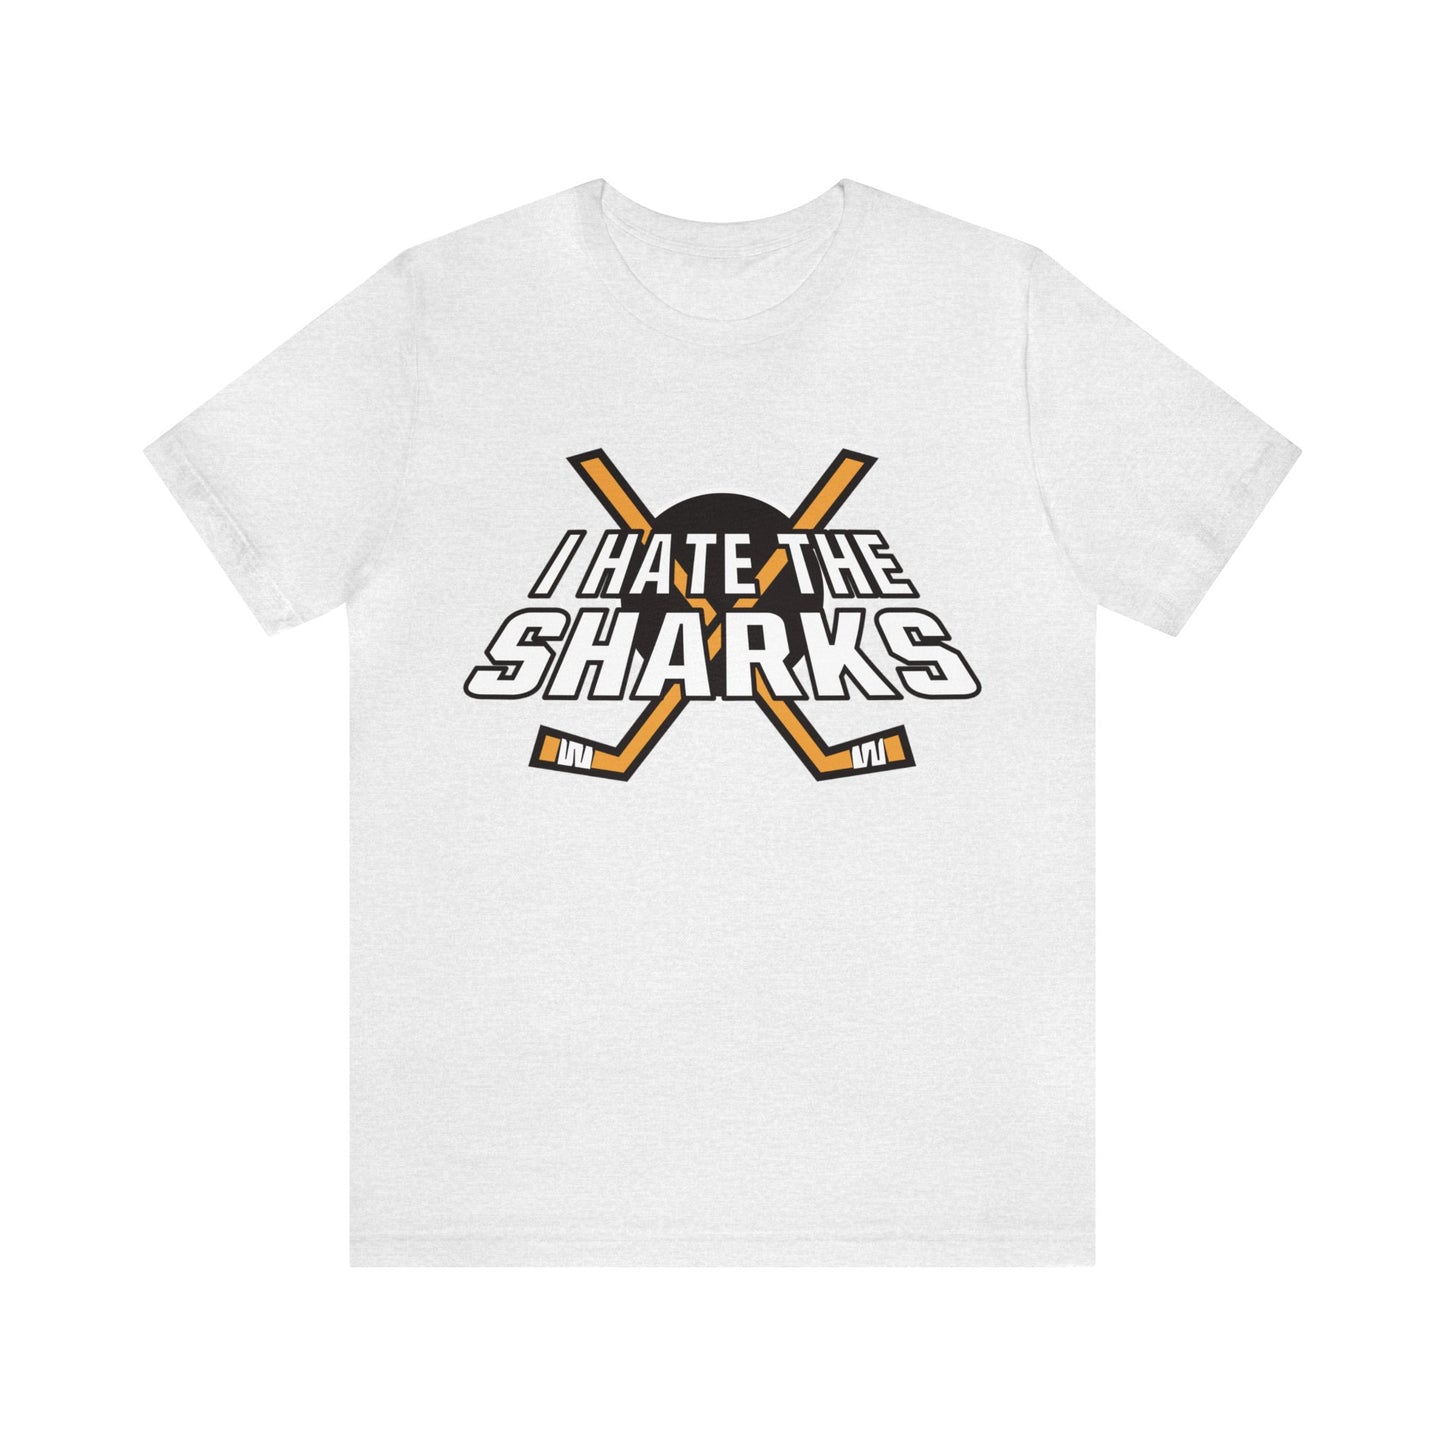 I Hate Sharks (for Ducks fans) - Unisex Jersey Short Sleeve Tee